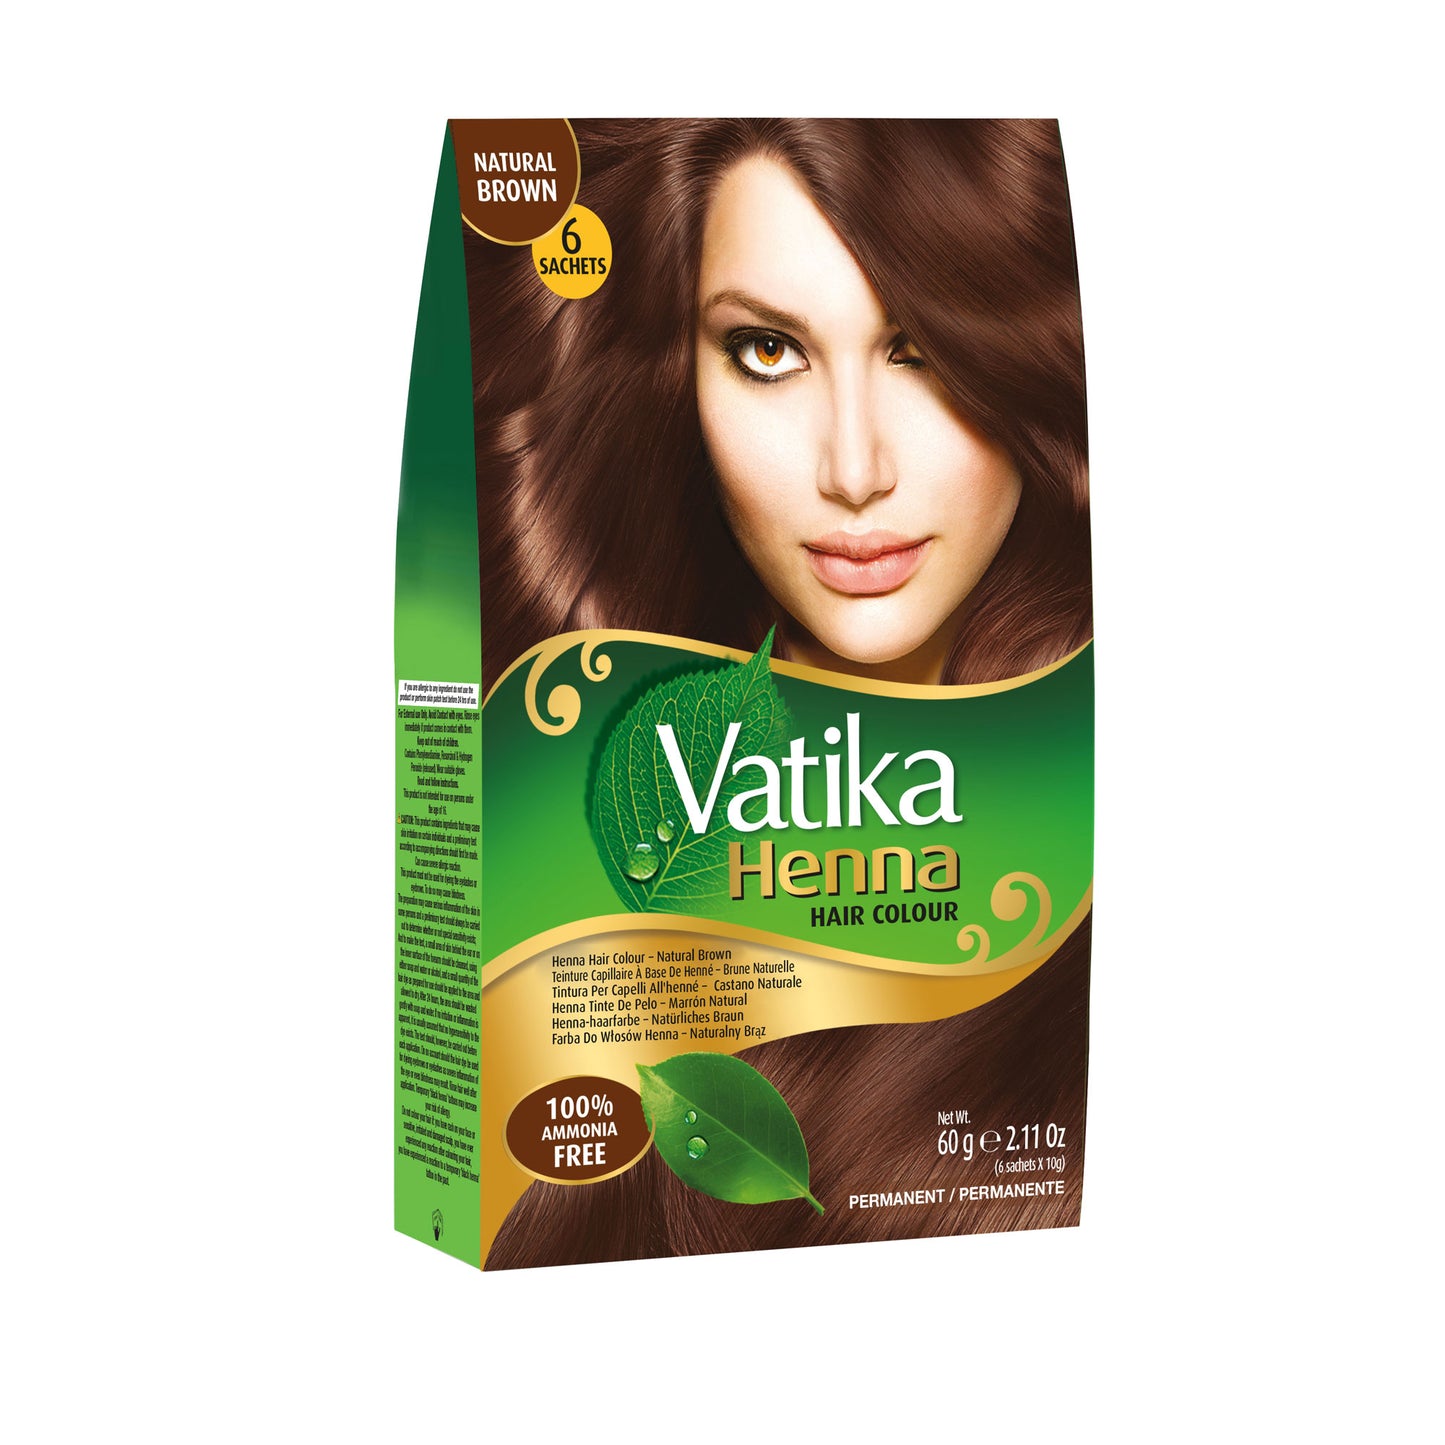 Vatika Henna Hair Colour - Natural Brown 10g-UK-New